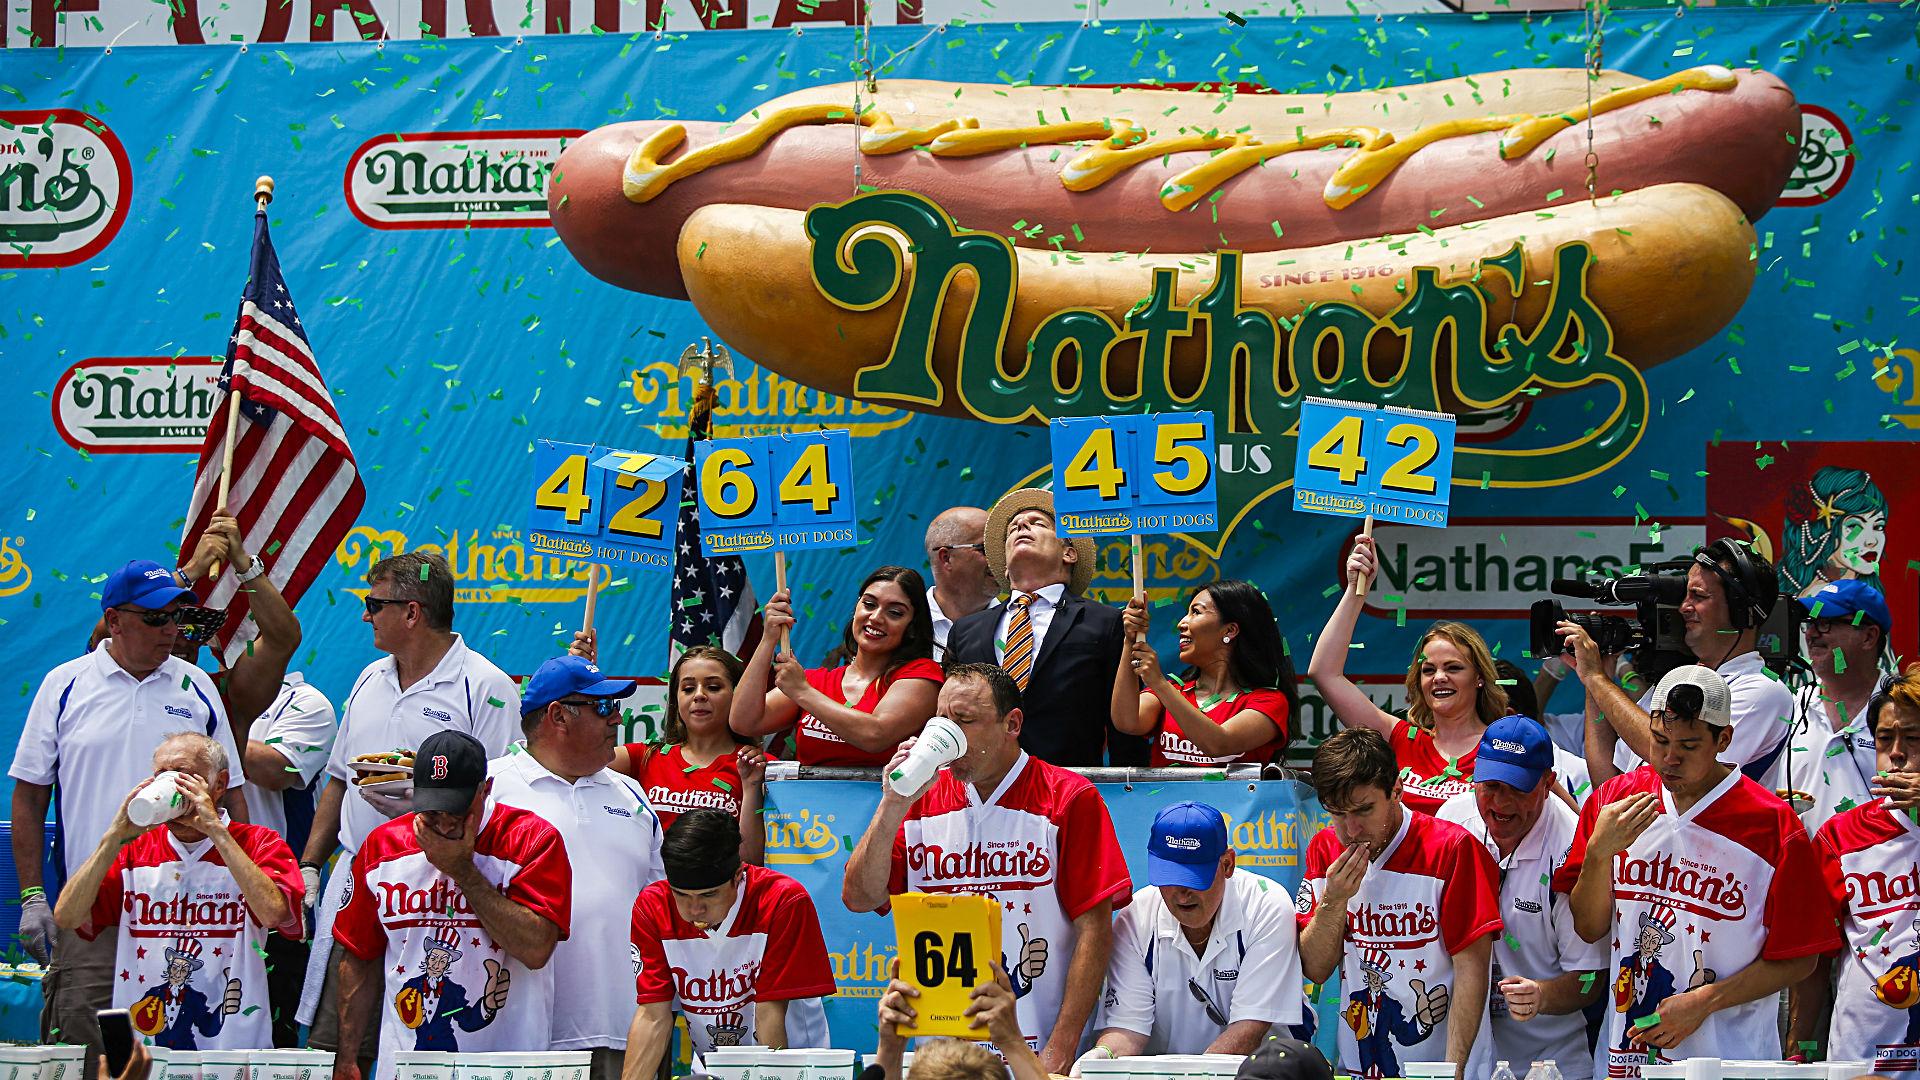 Photo: hot dog eating contest purse